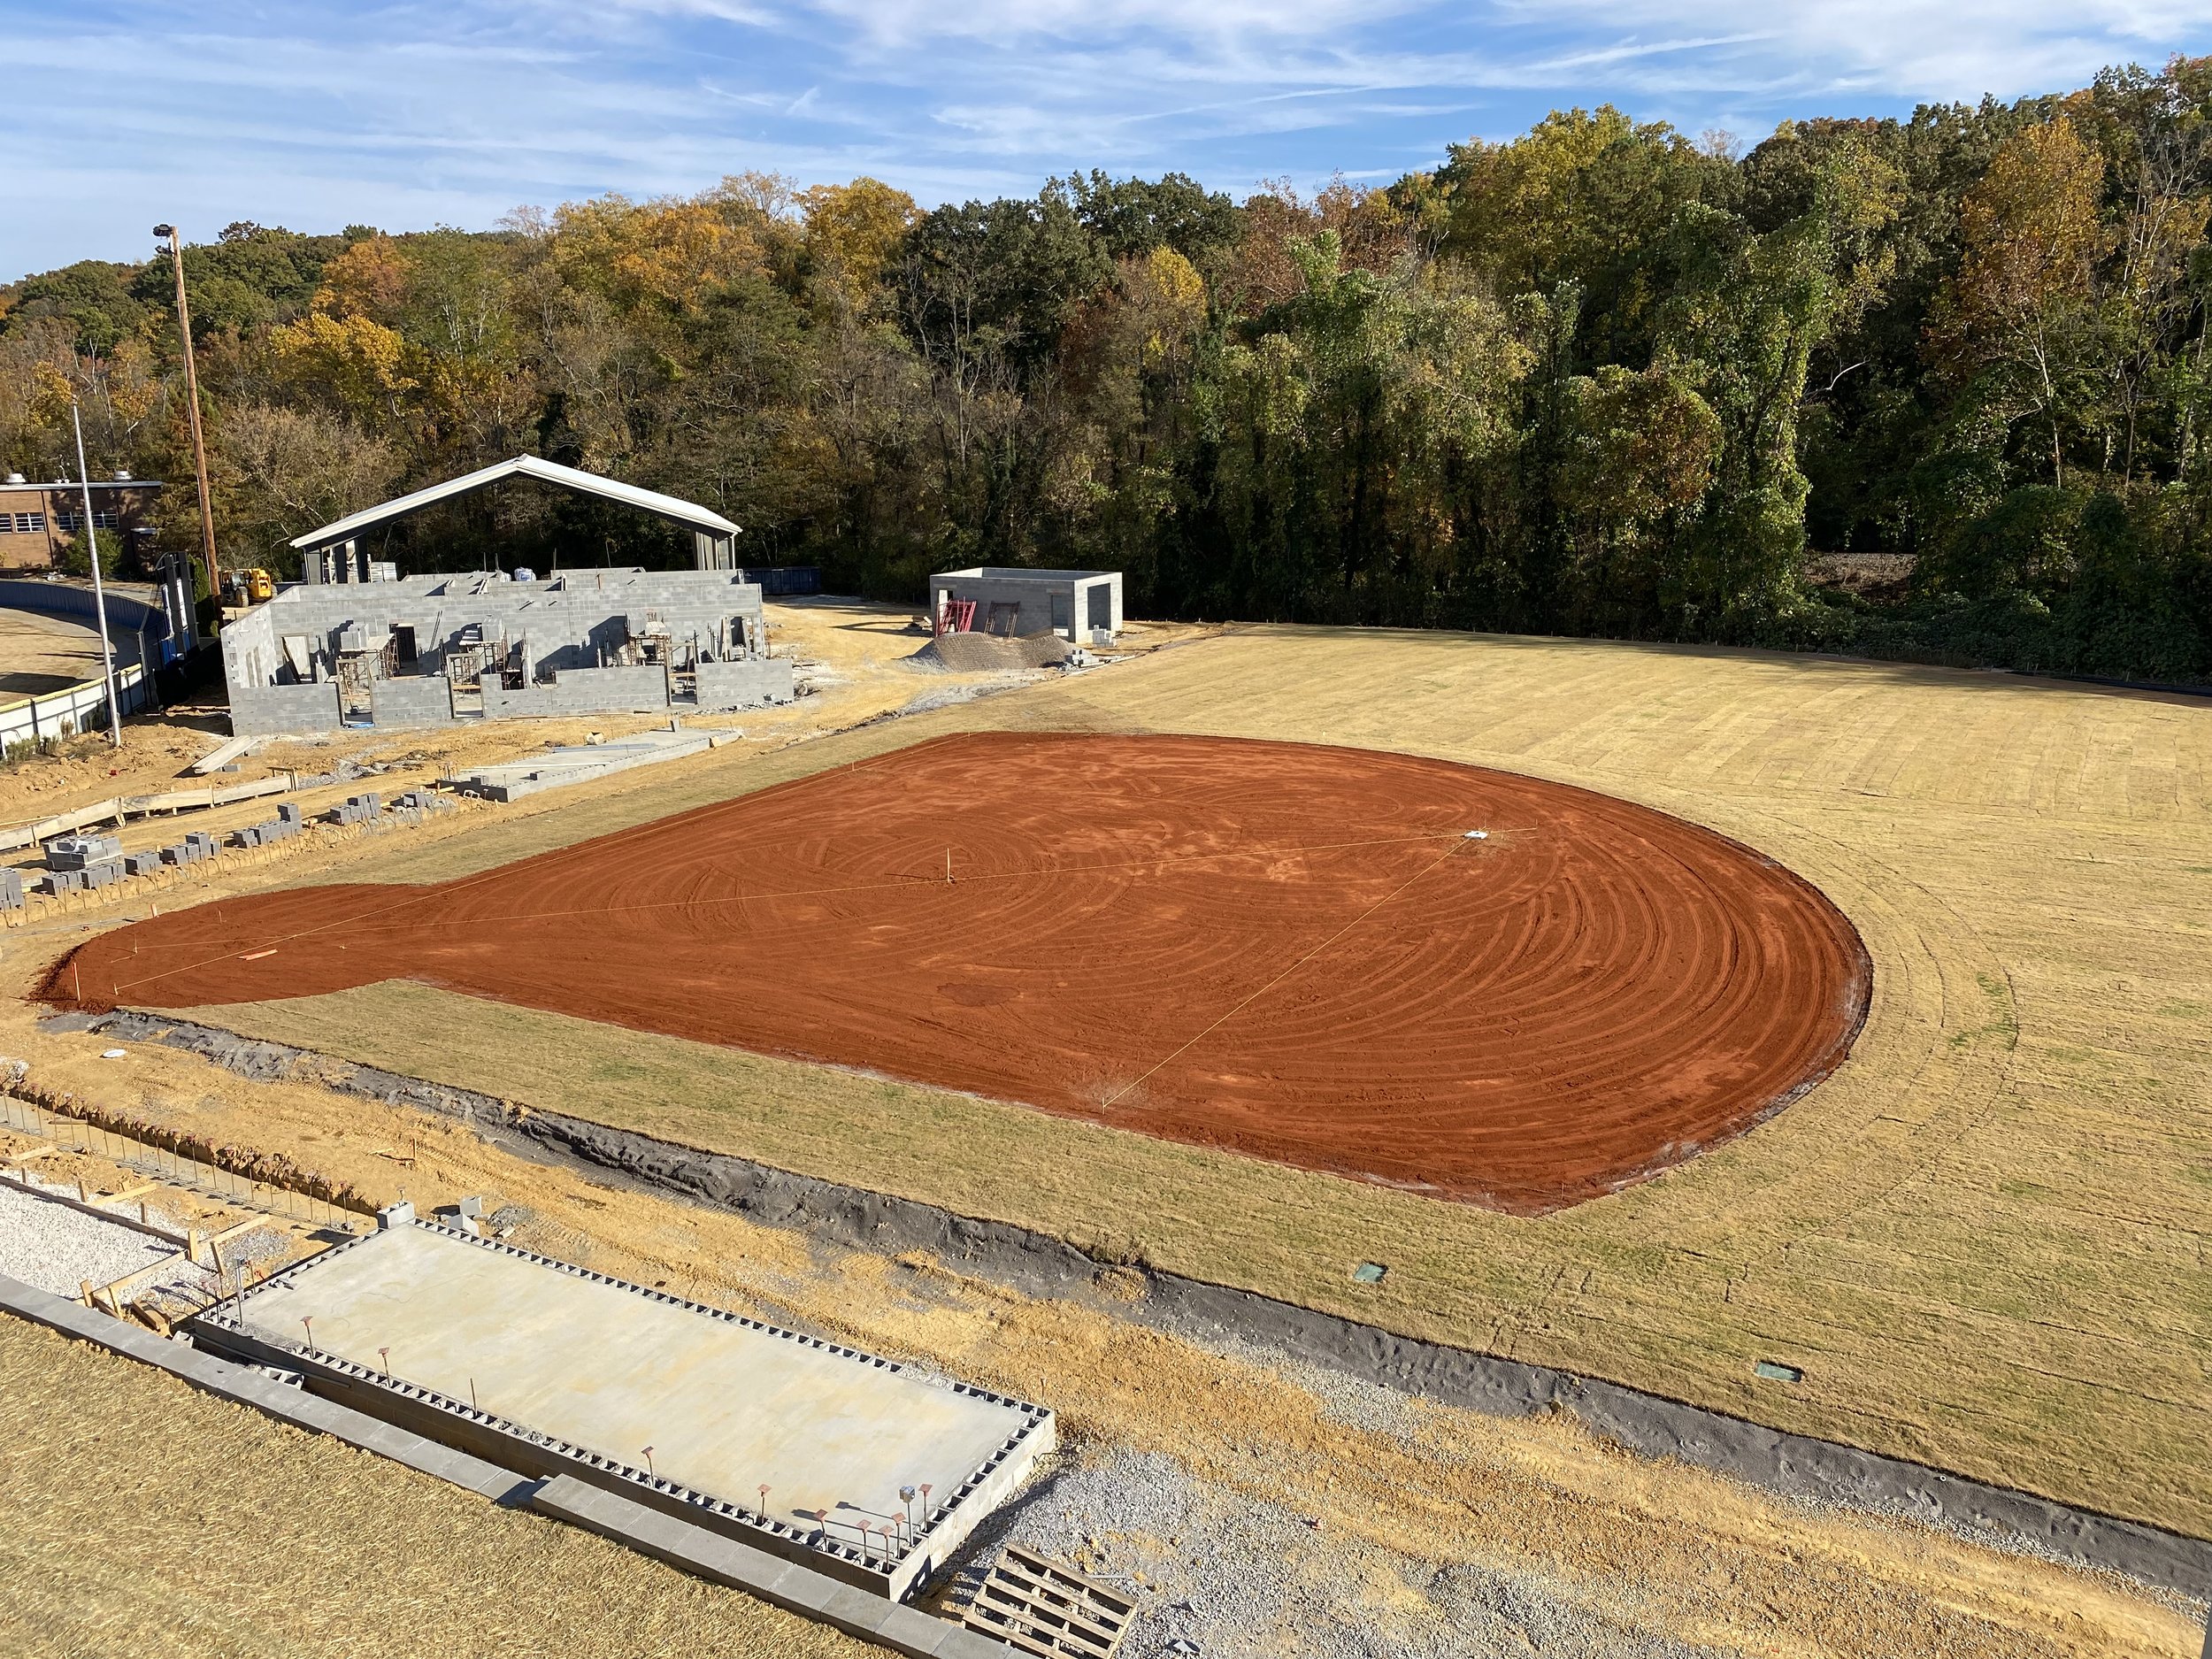 West High School Softball, Knoxville, TN